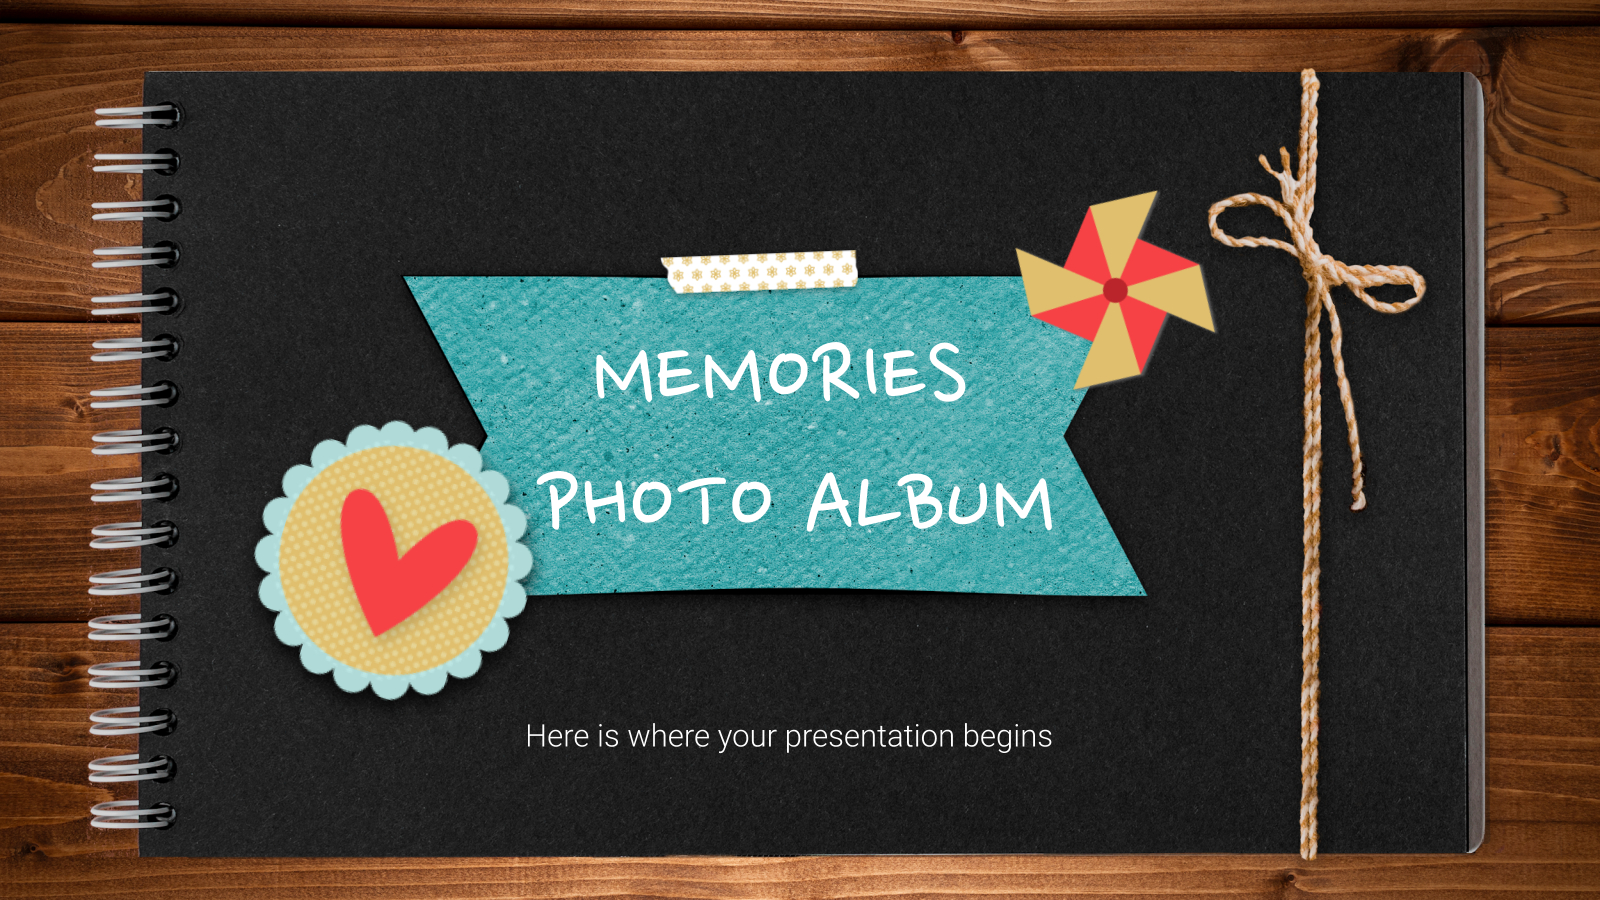 Memories Photo Album Google Slides Theme And Powerpoint Template With Regard To Powerpoint Photo Album Template